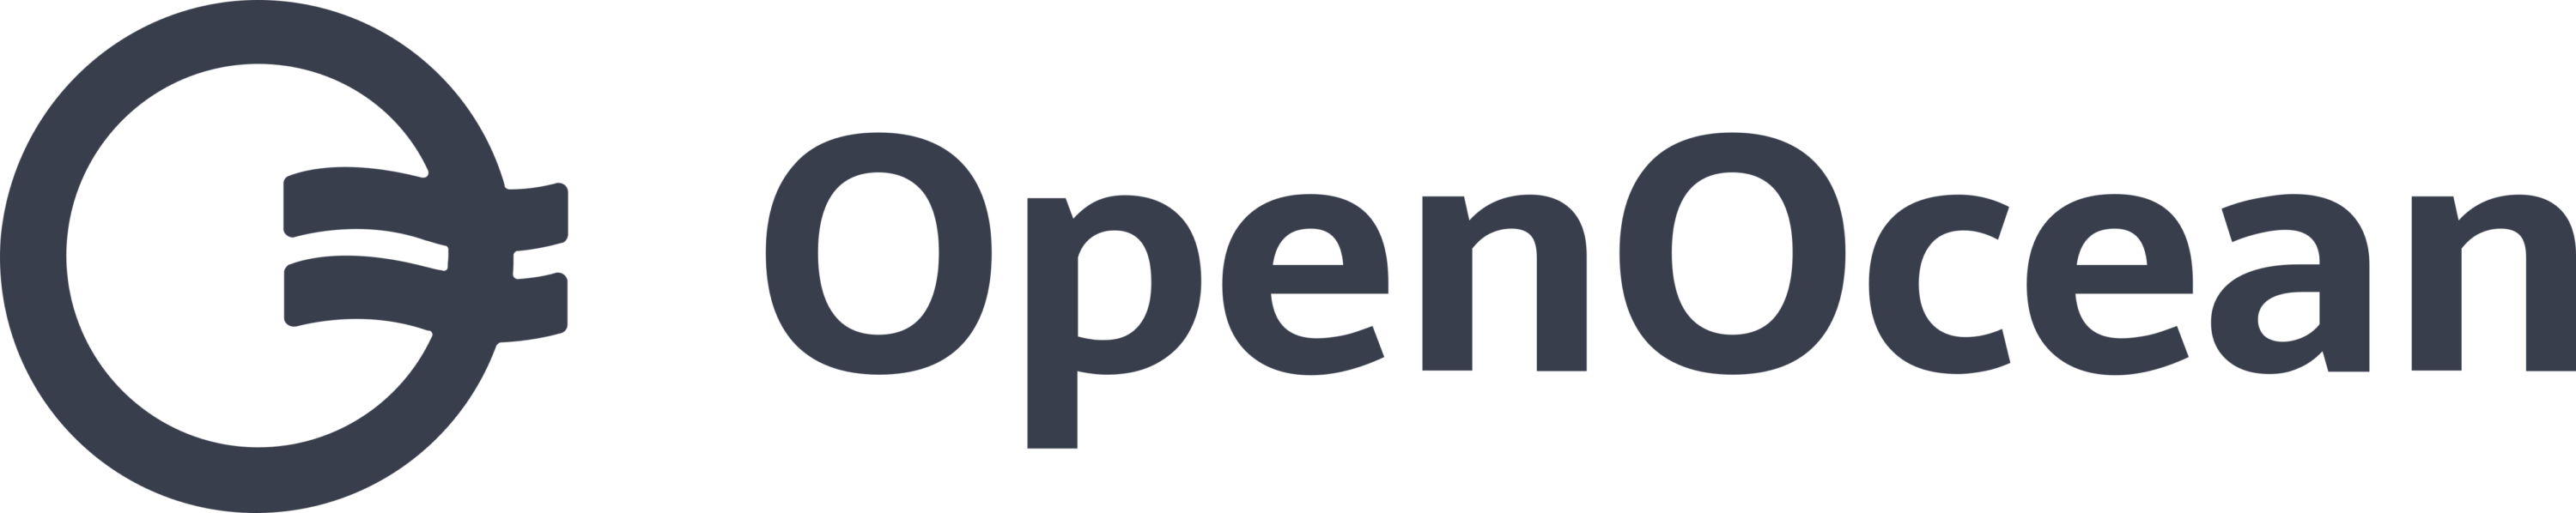 OpenOcean Logo